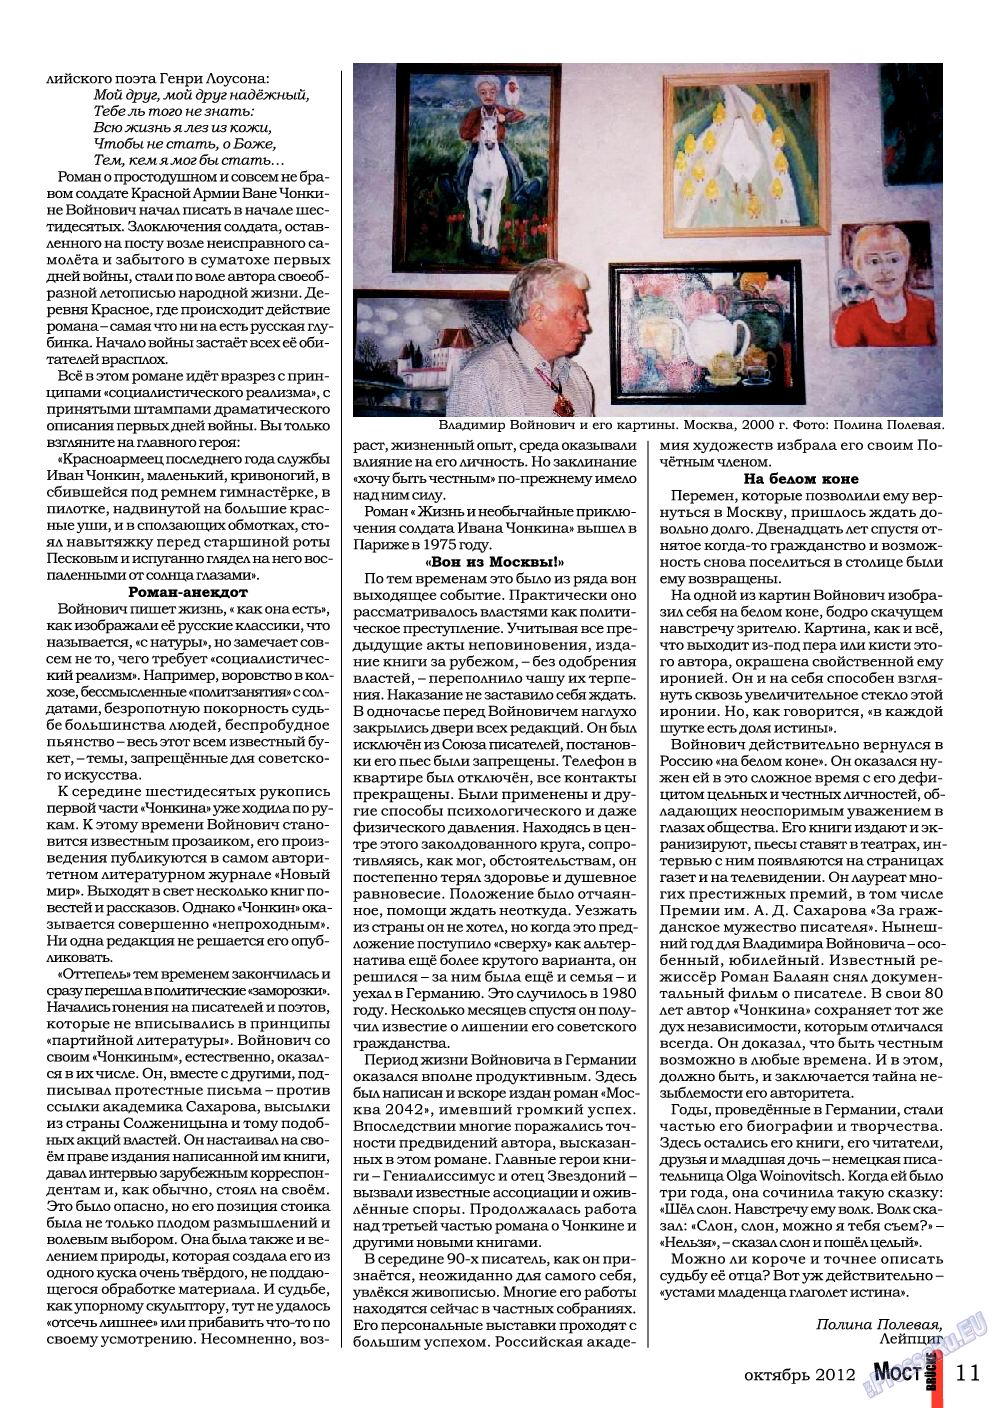 Мост, журнал. 2012 №10 стр.11